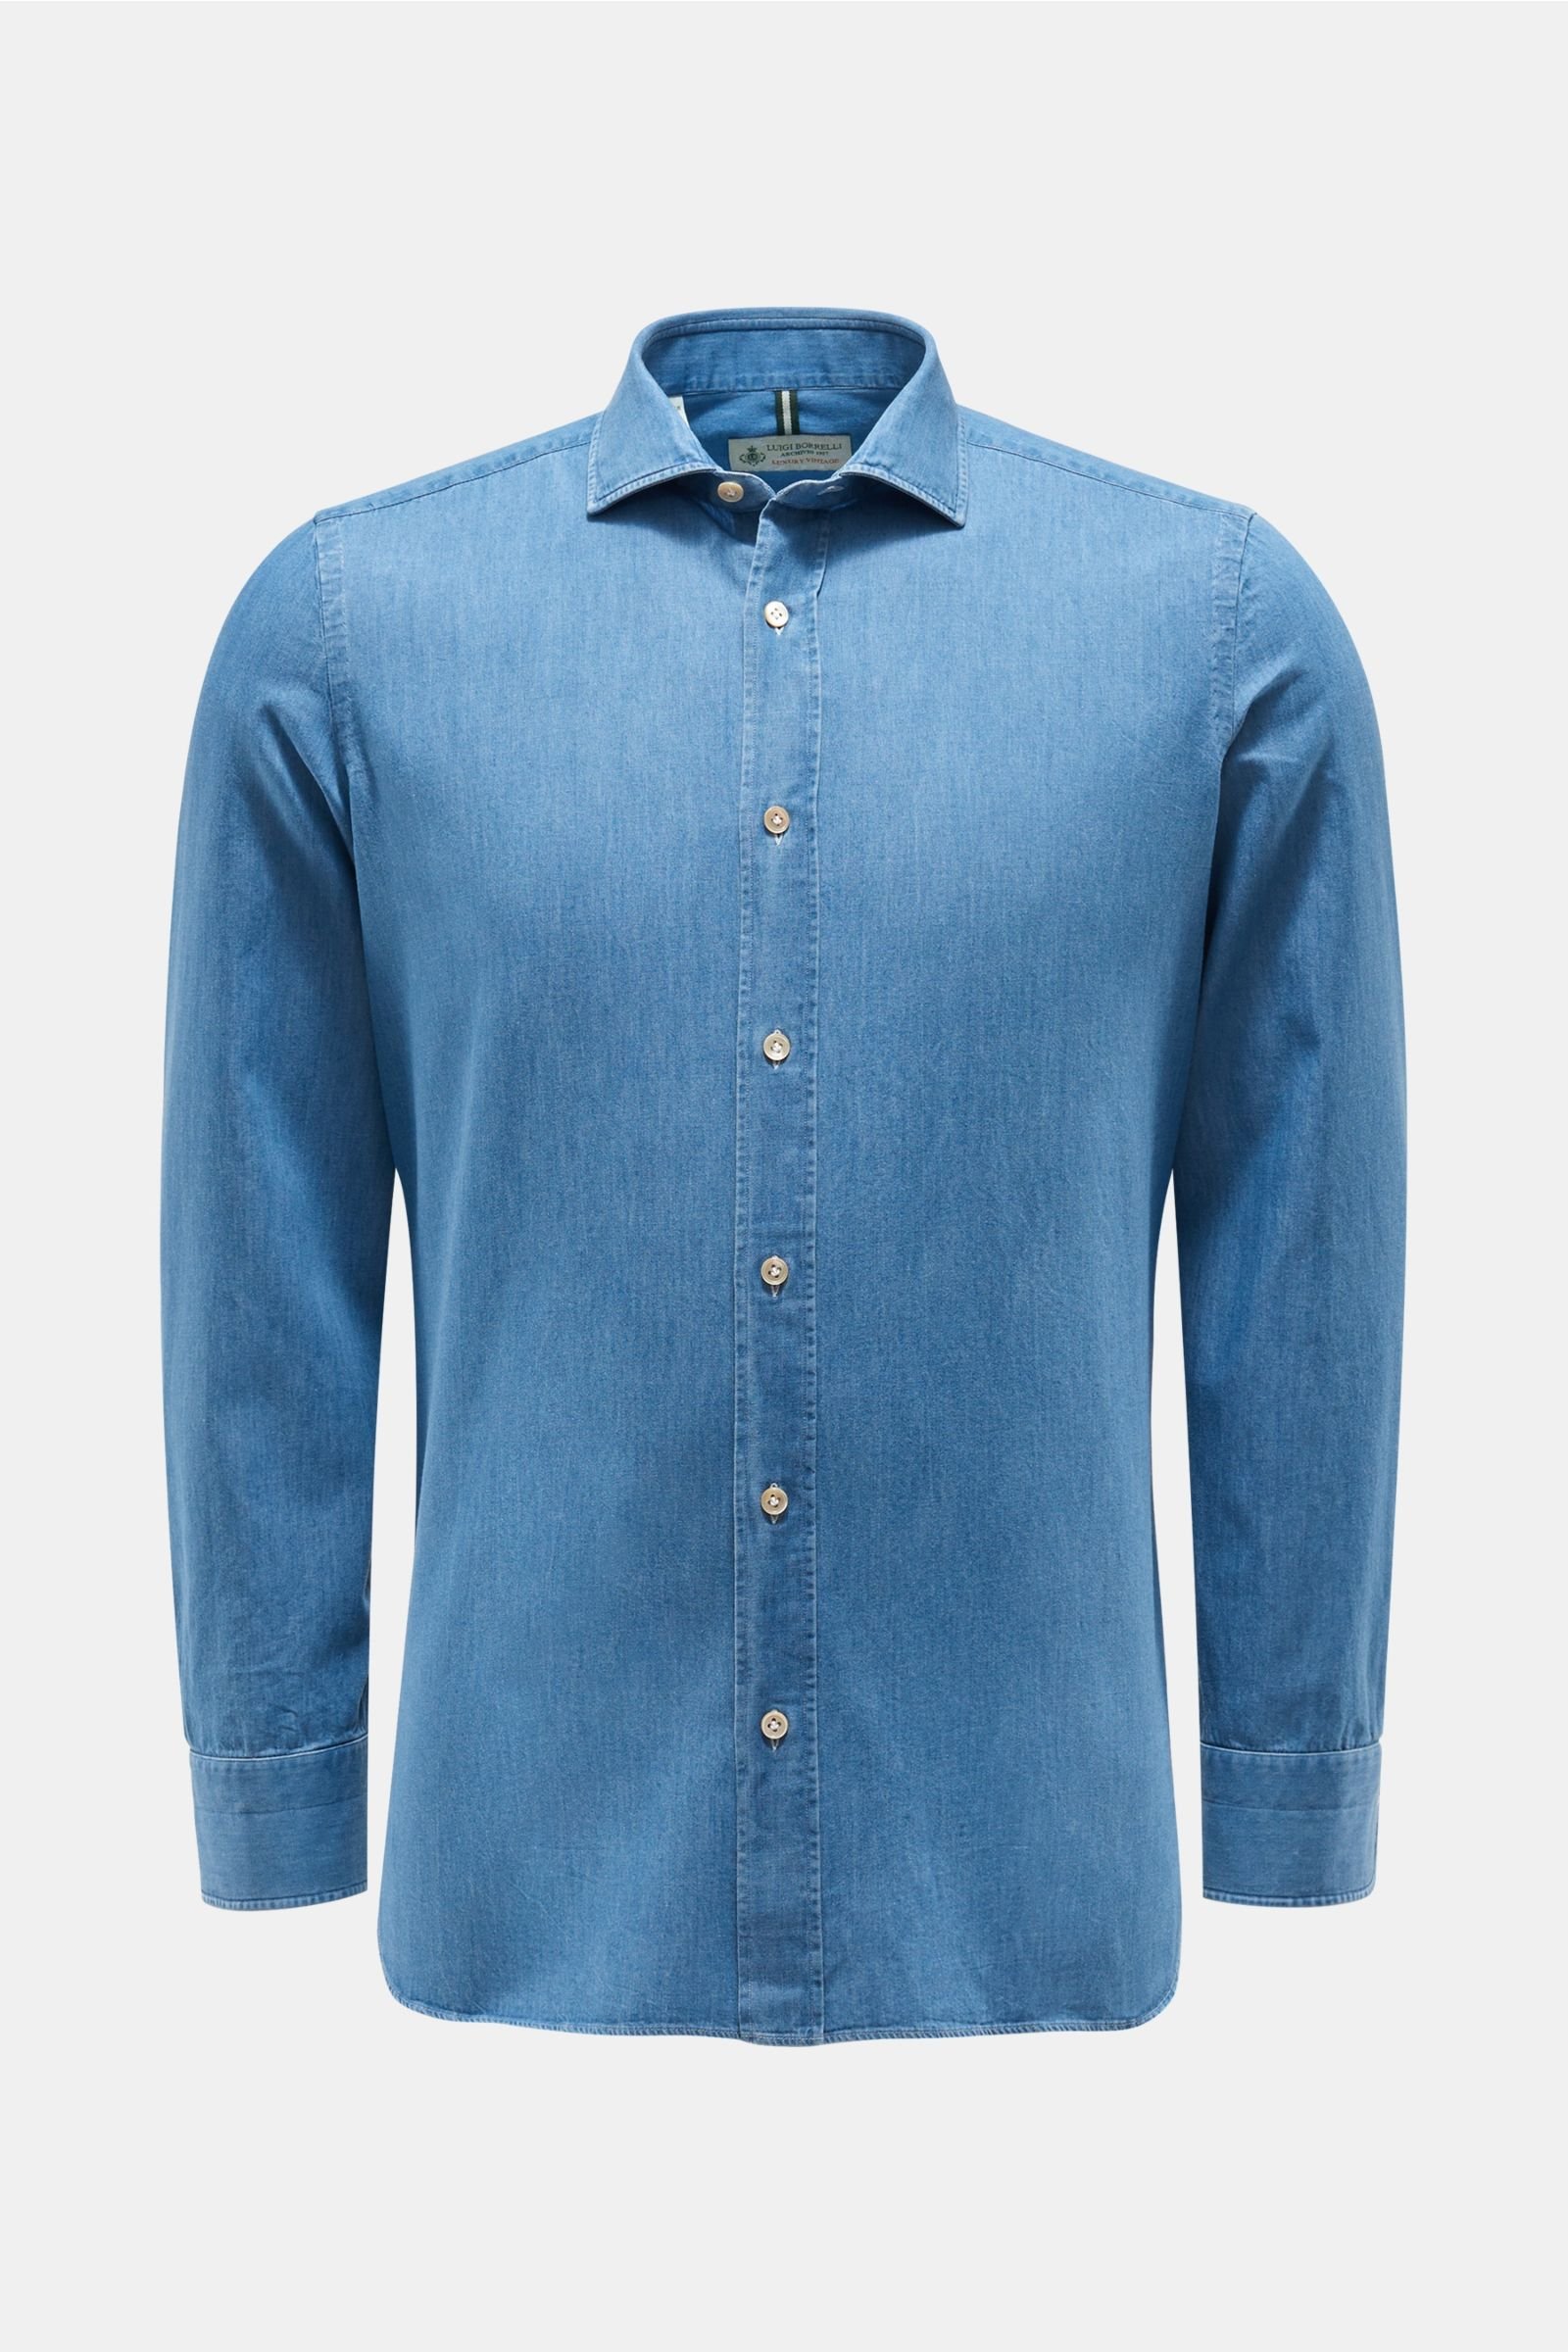 Chambray shirt slim collar smoky blue